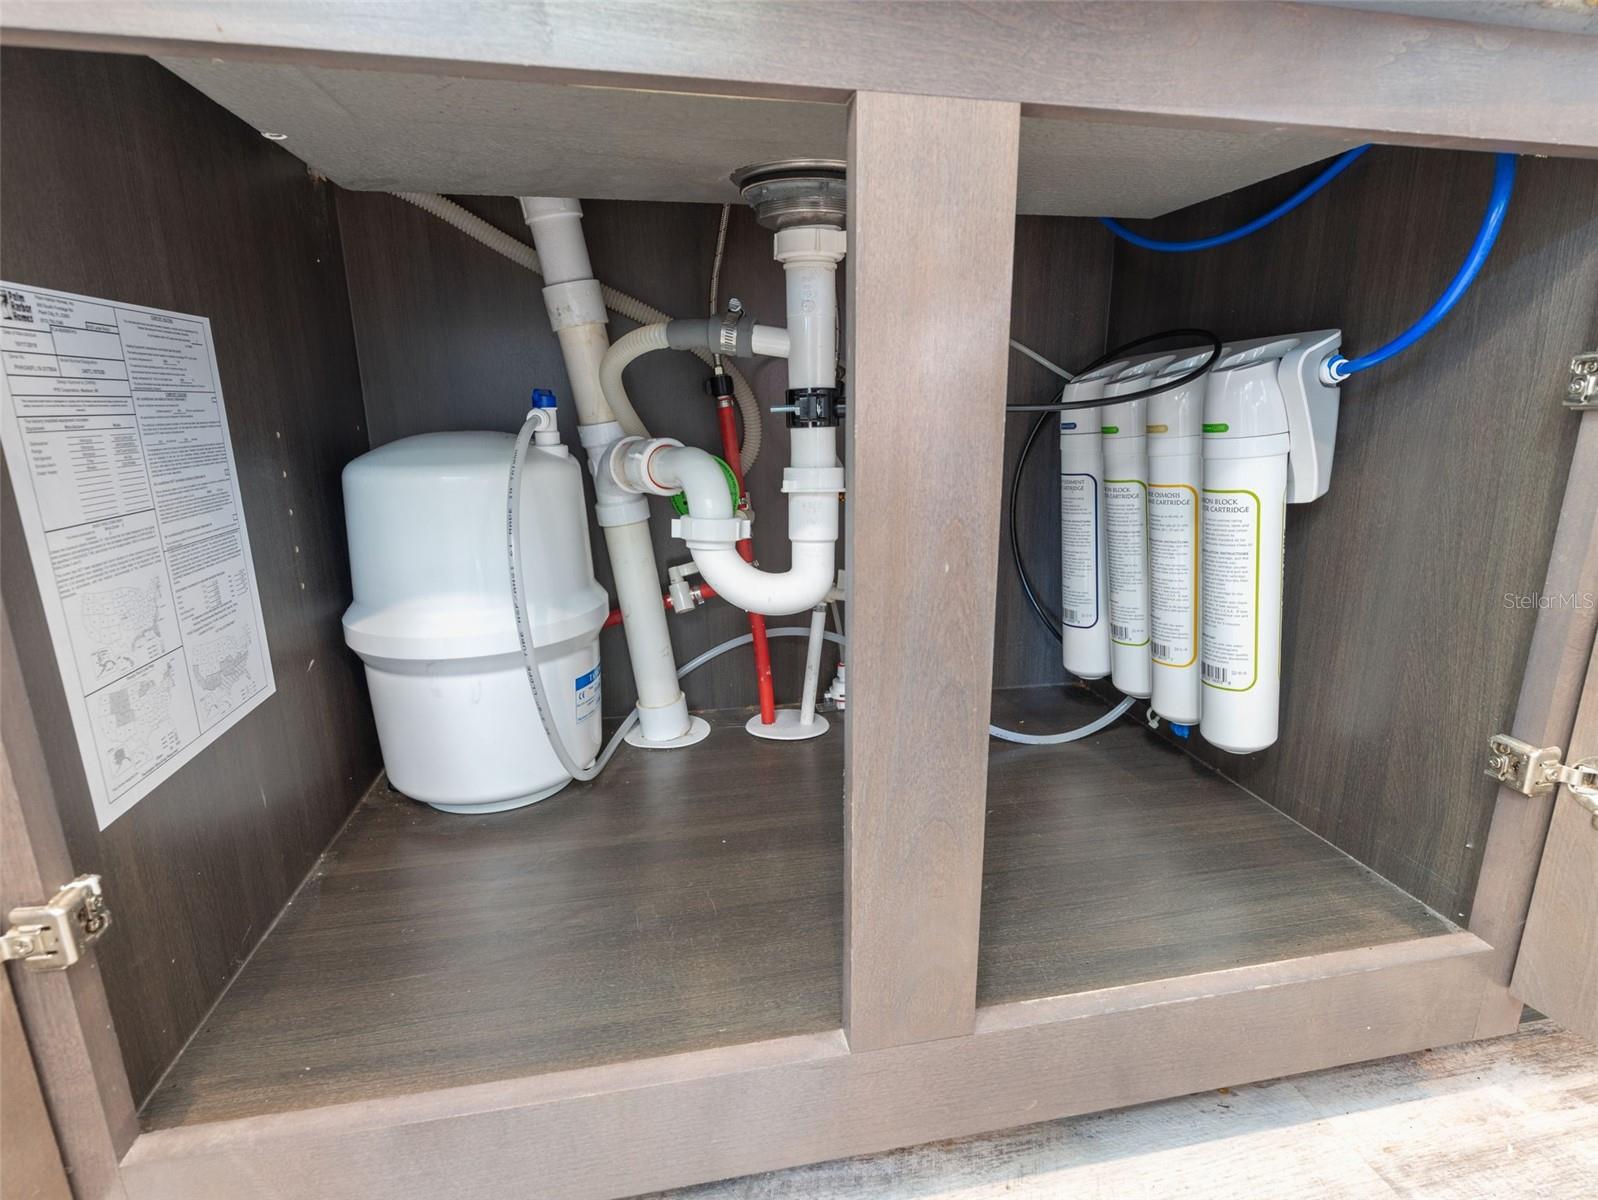 Kitchen - Water filtration system